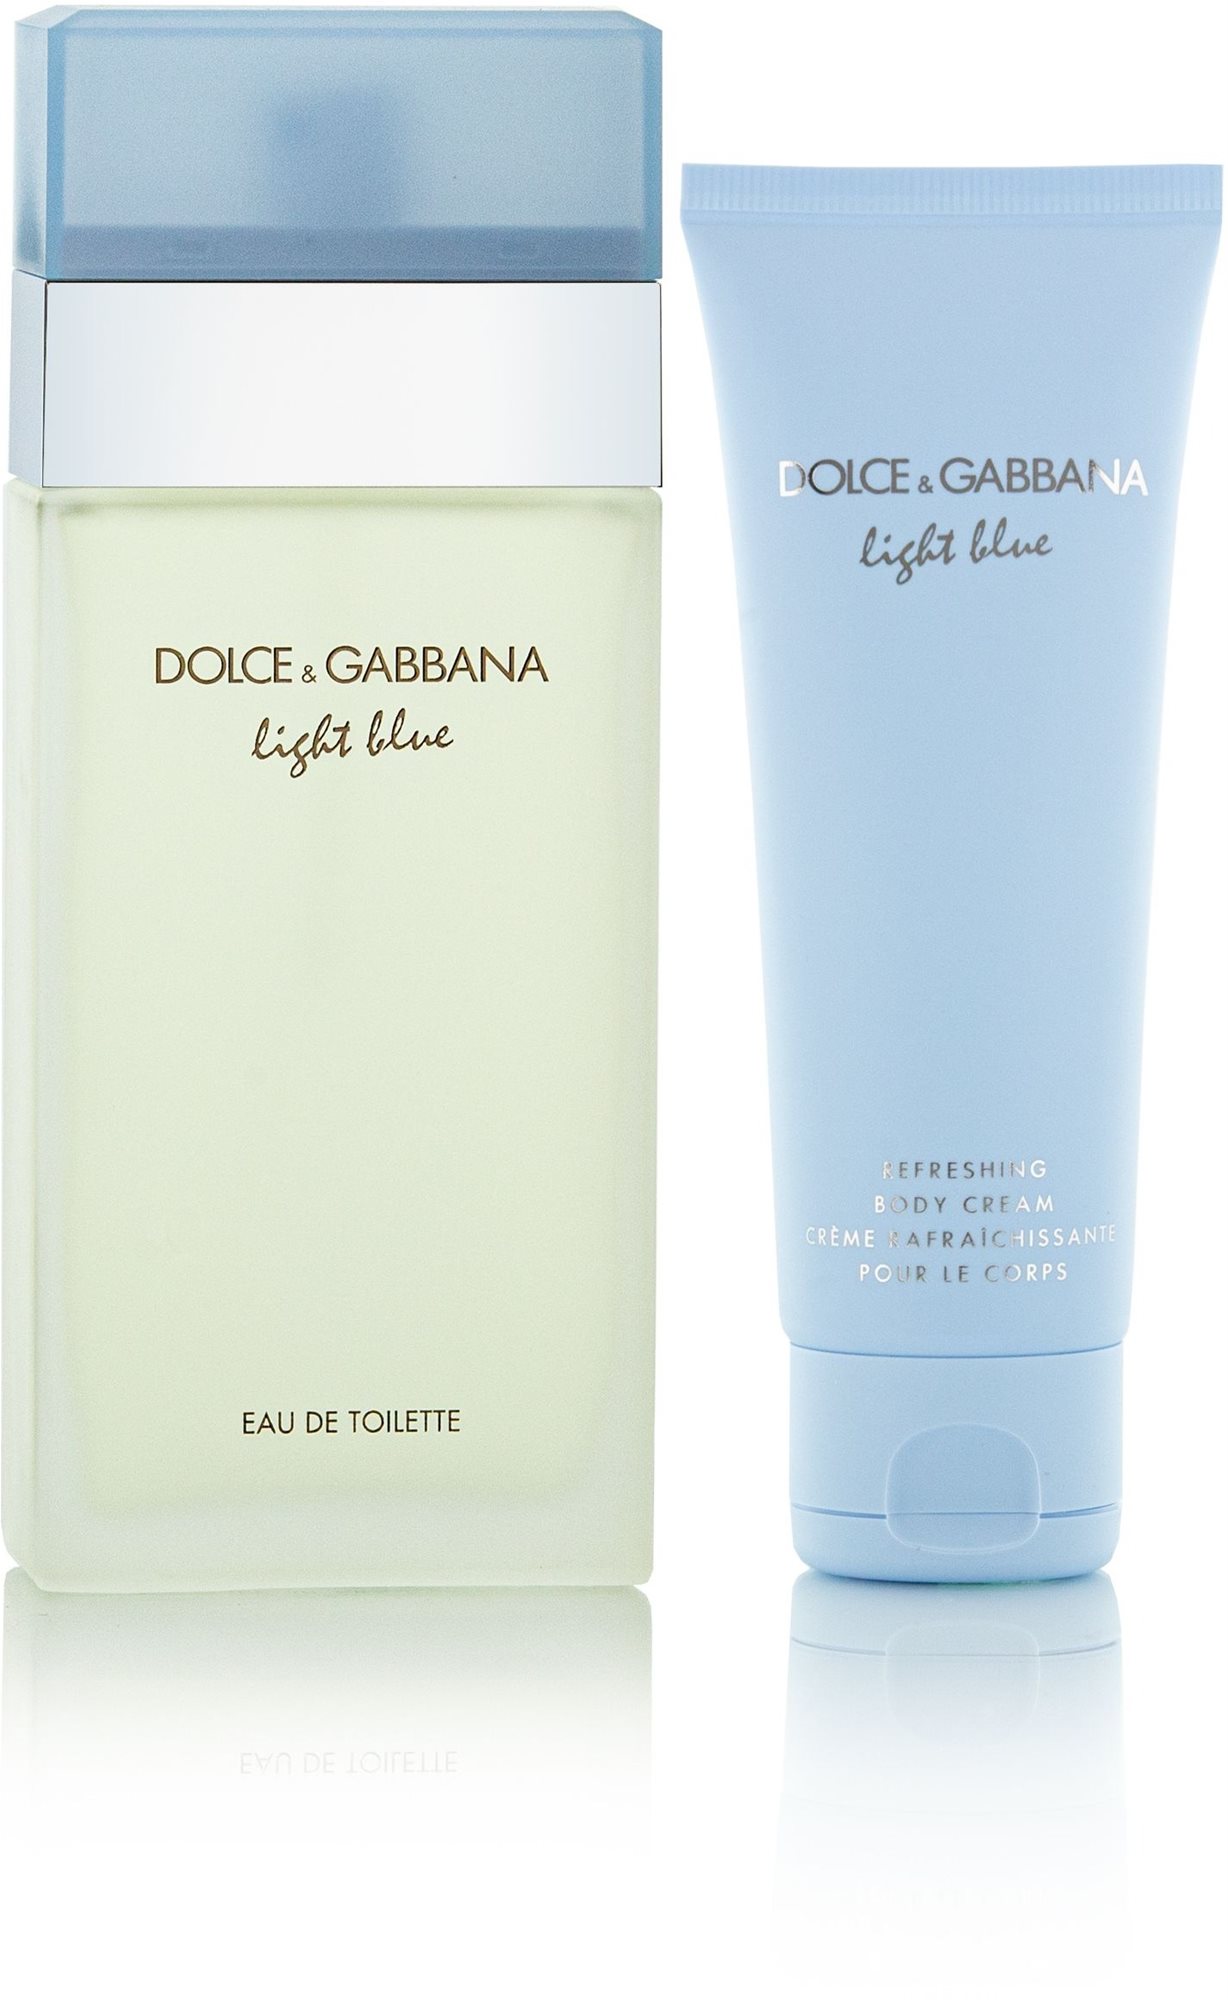 DOLCE & GABBANA Light Blue EdT Set 175 ml